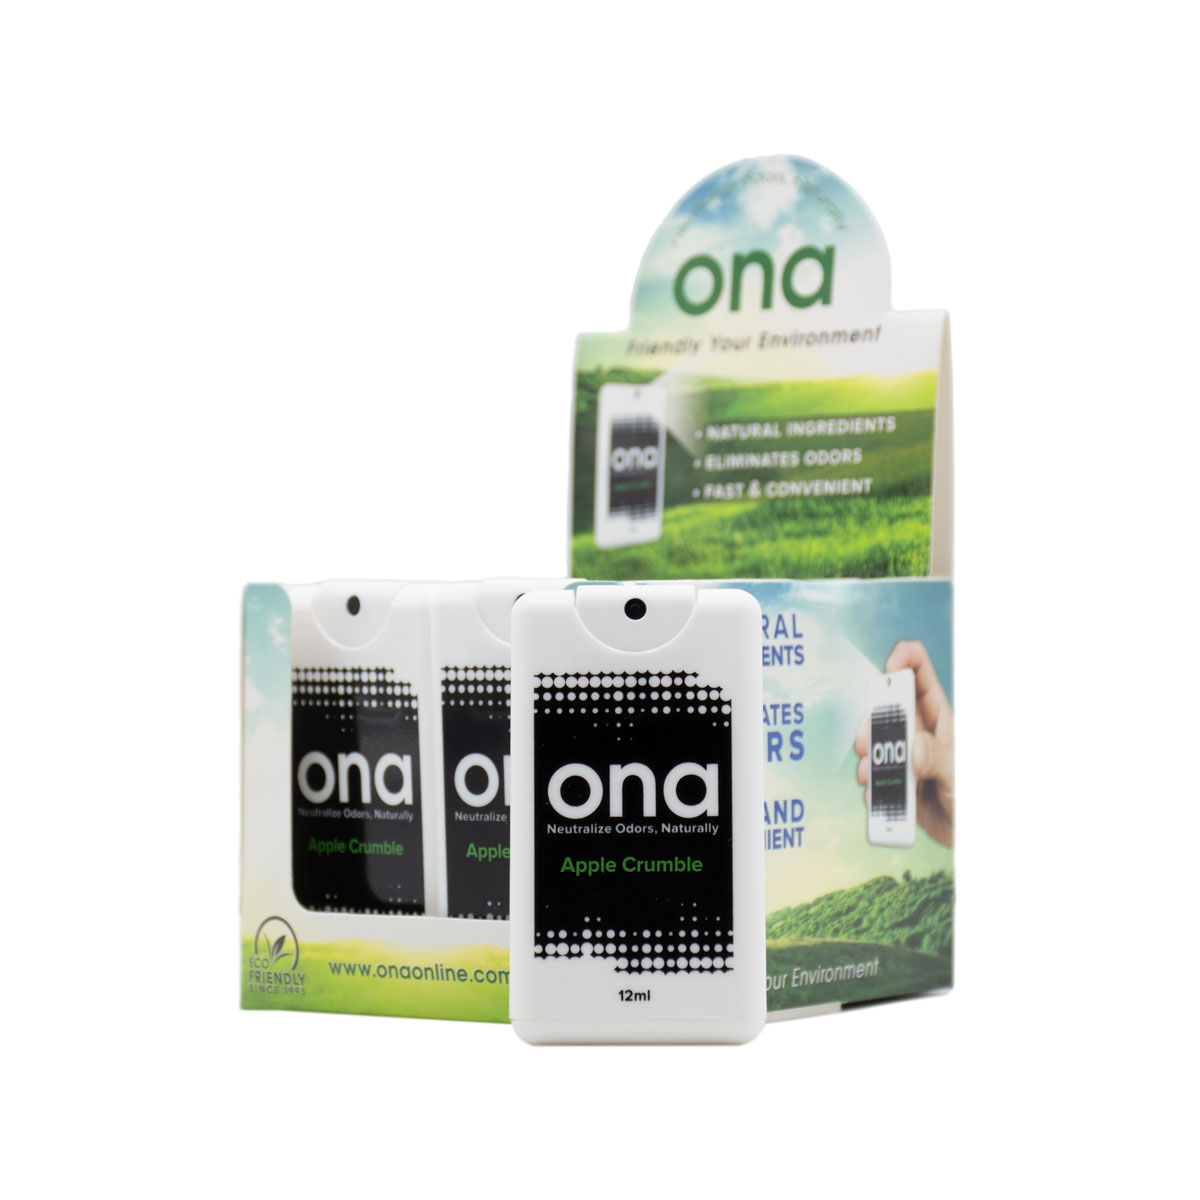 ONA Spray Card Fresh Linen 25 ml